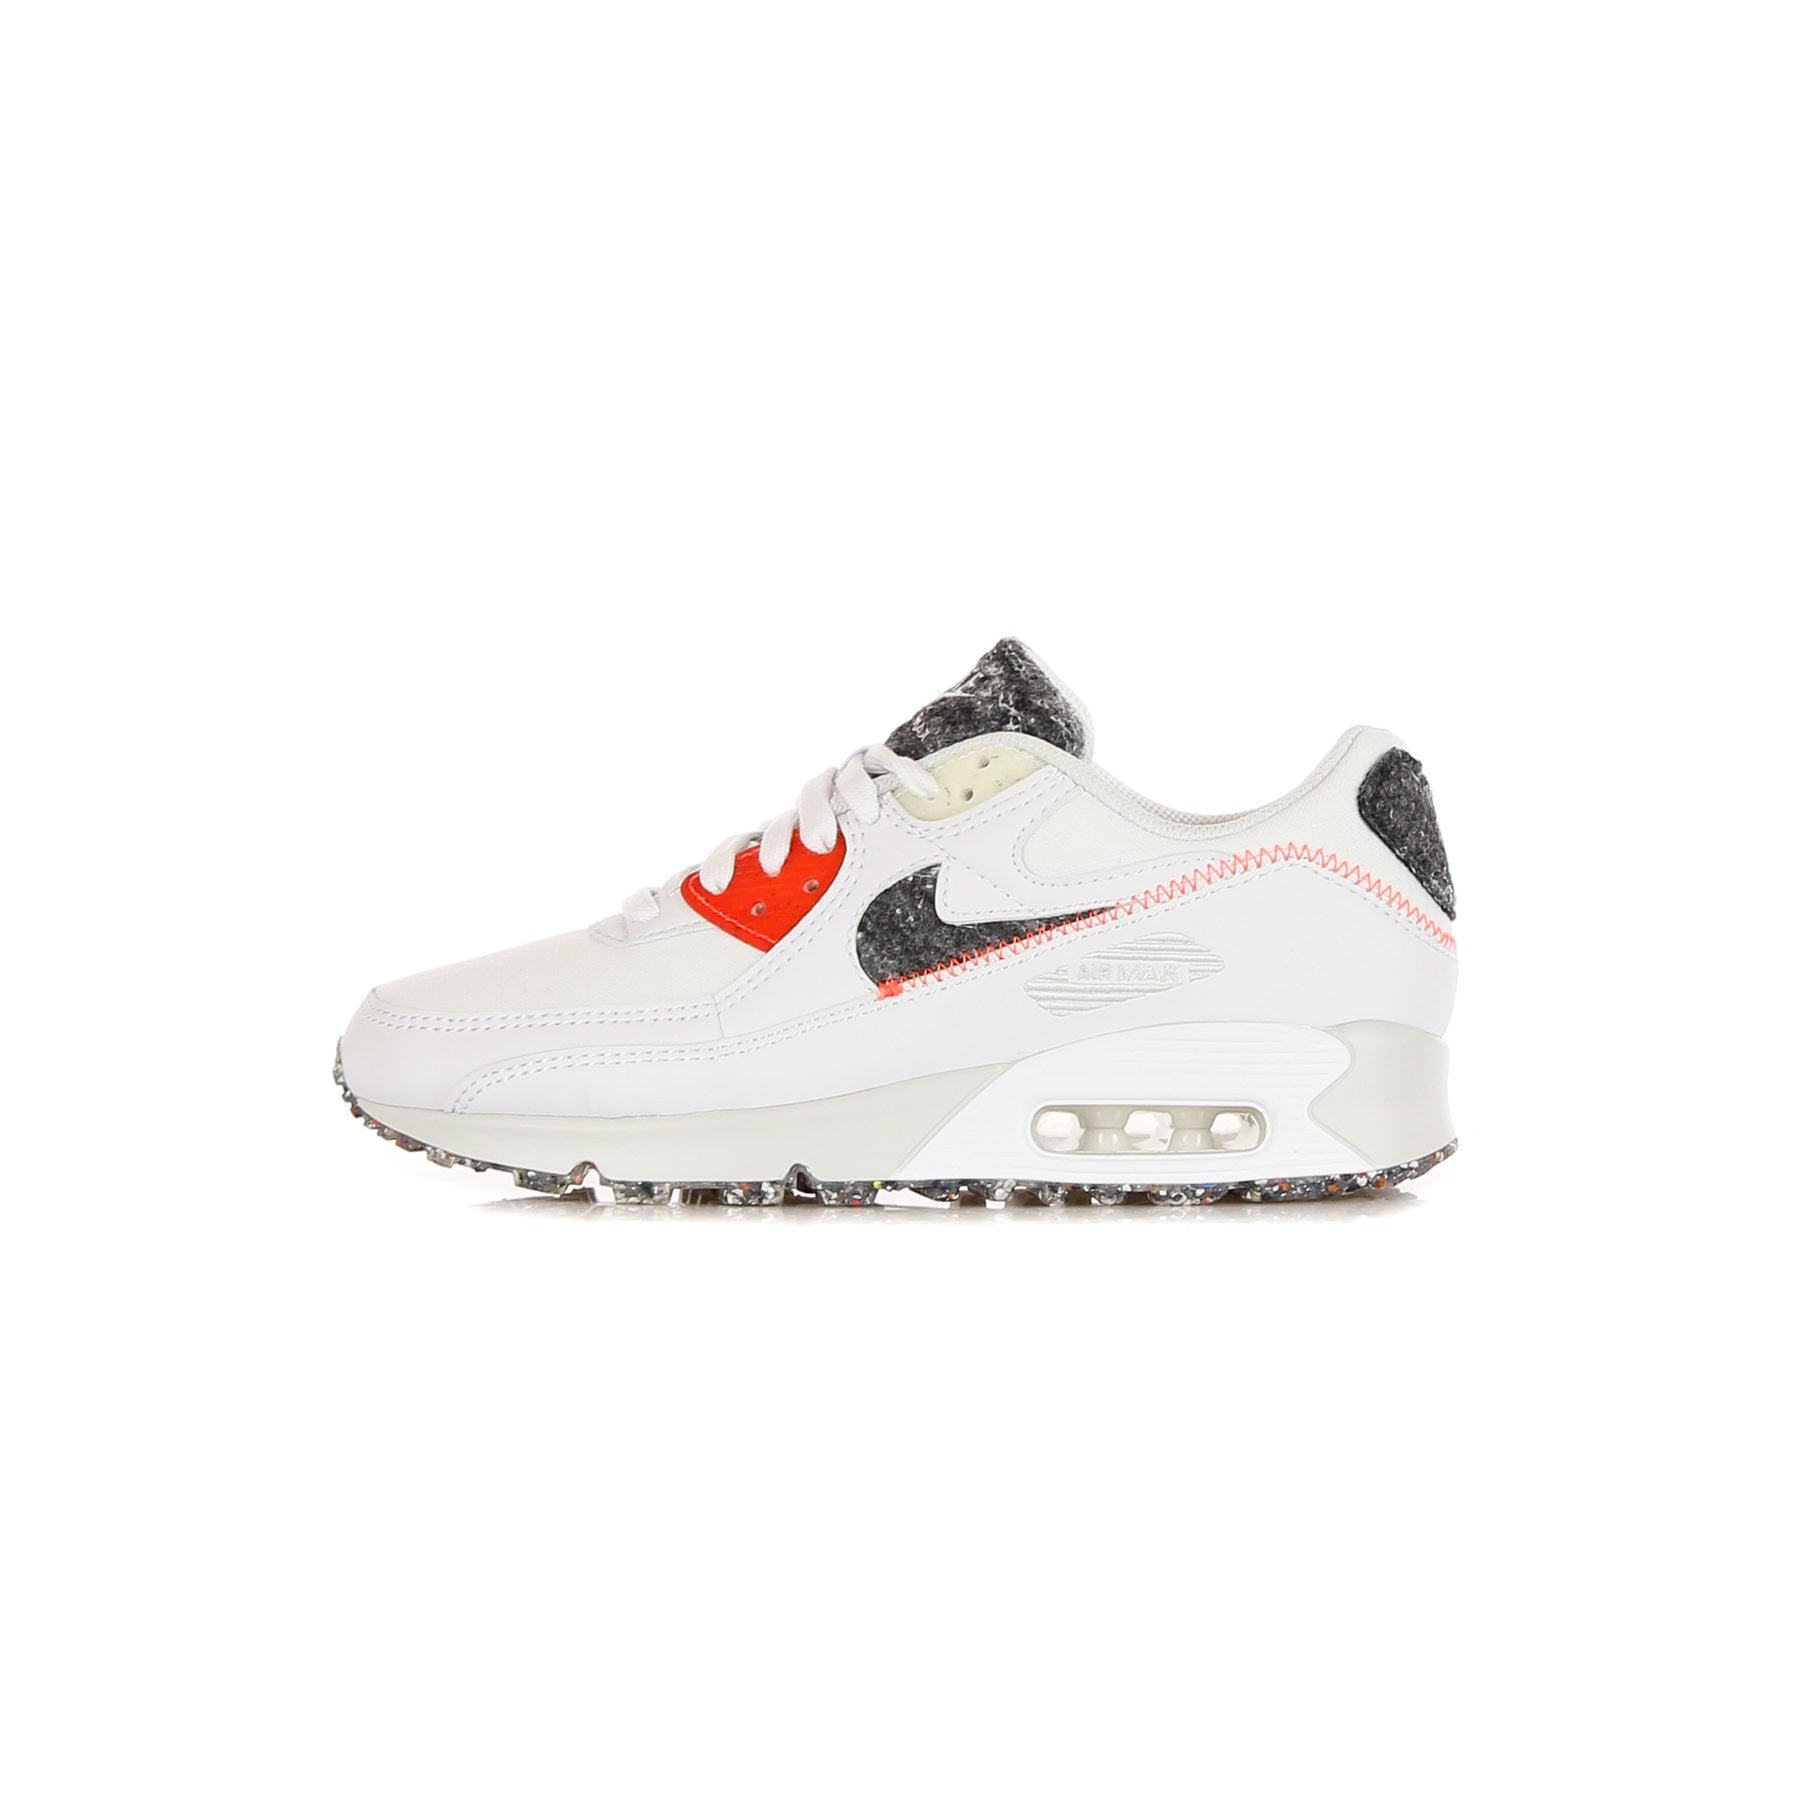 Nike, Scarpa Bassa Uomo Air Max 90, White/photon Dust/bright Crimson